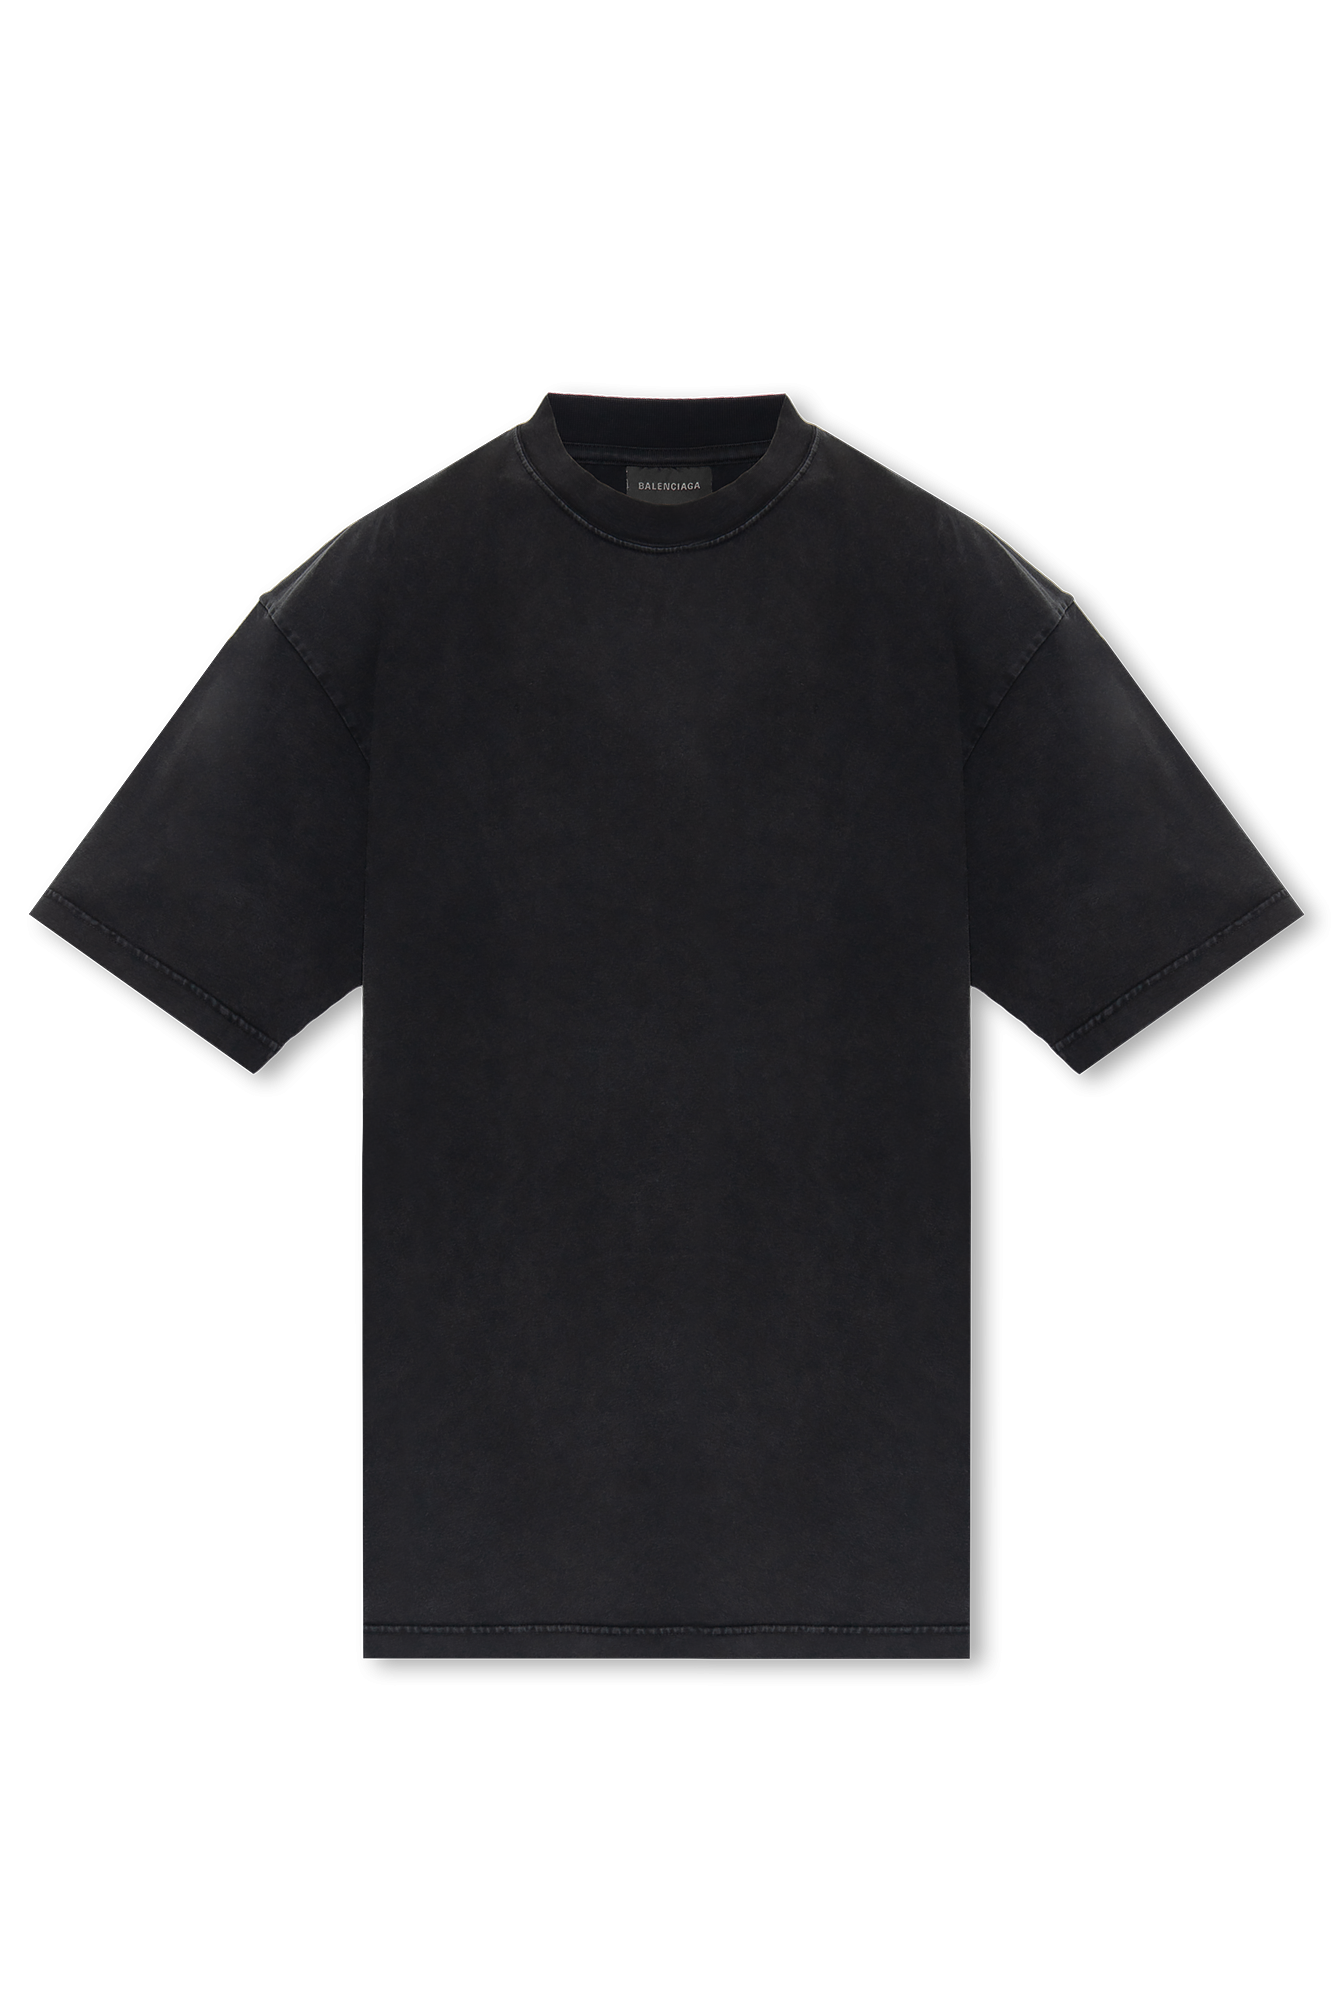 Balenciaga T-shirt with rhinestone logo, Women's Clothing